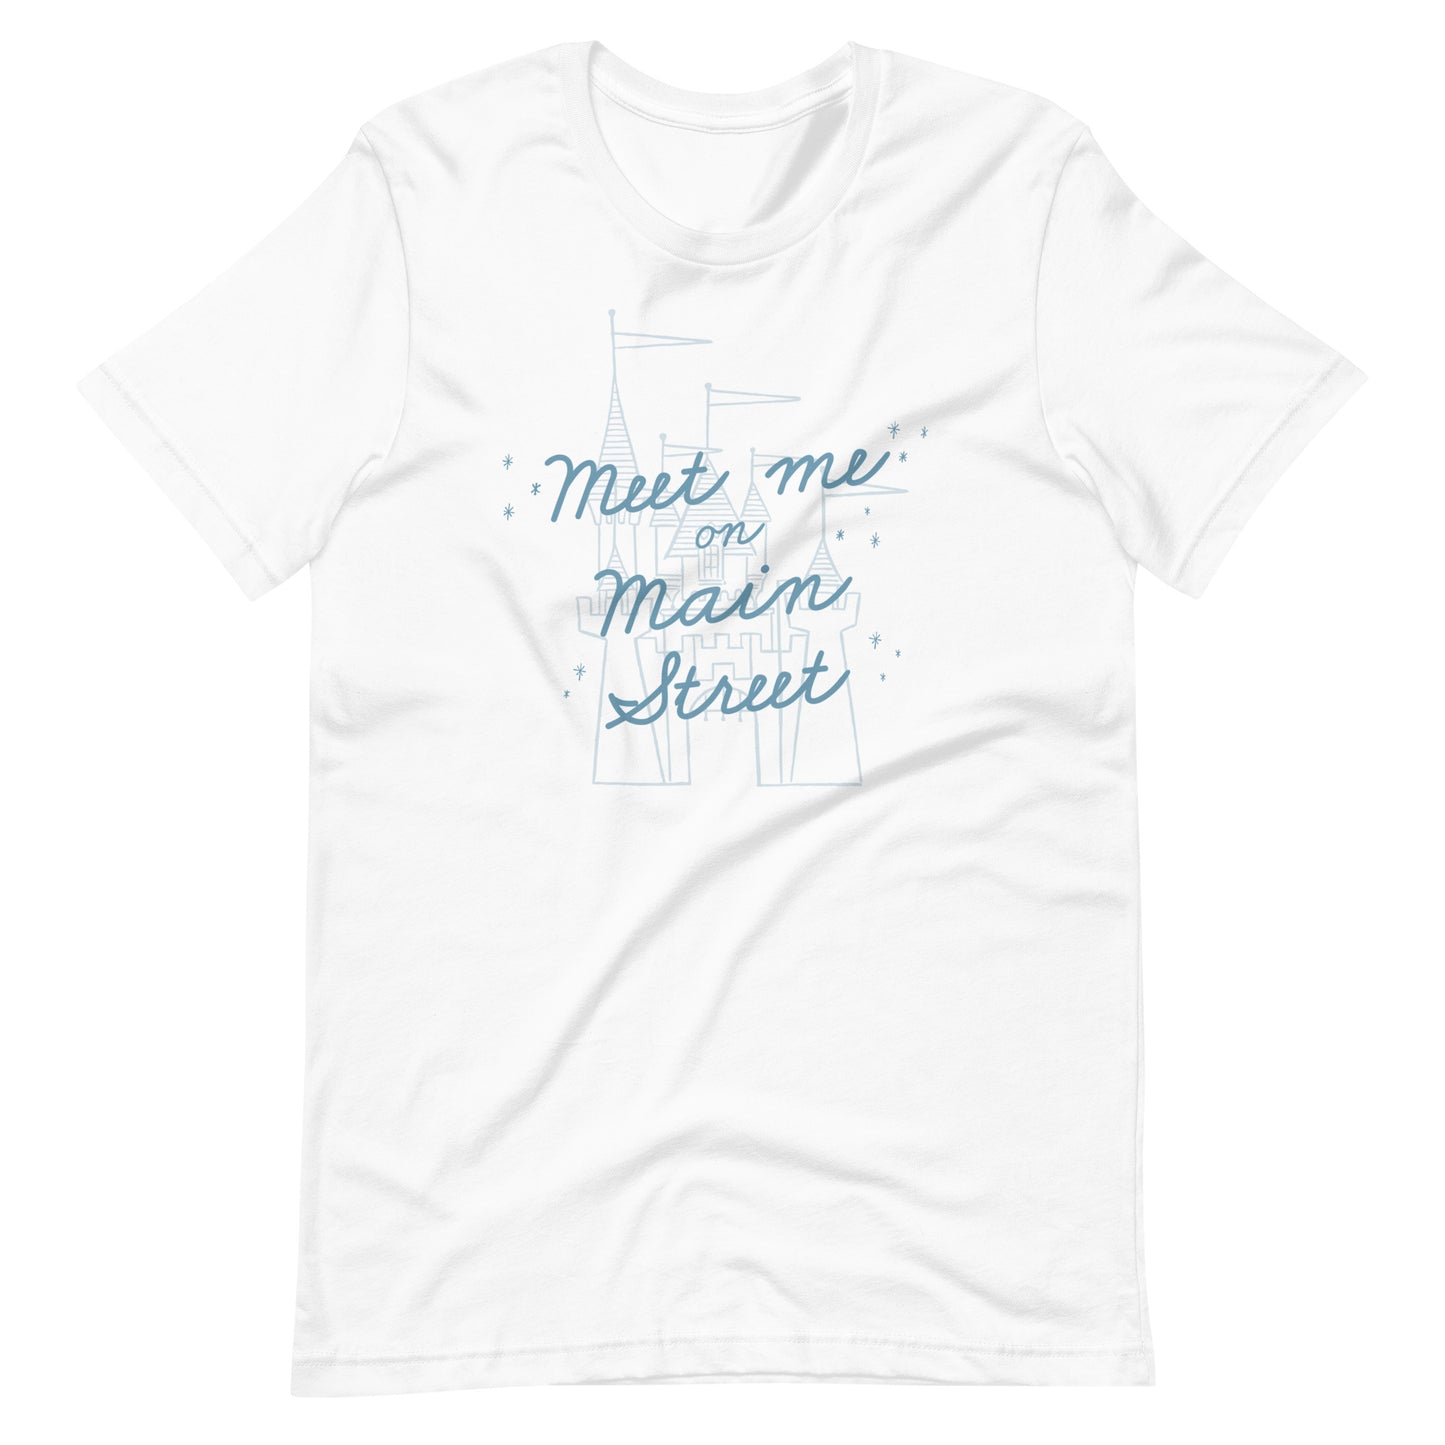 Pixie Dust Collection - Meet Me on Main Street Unisex T-Shirt